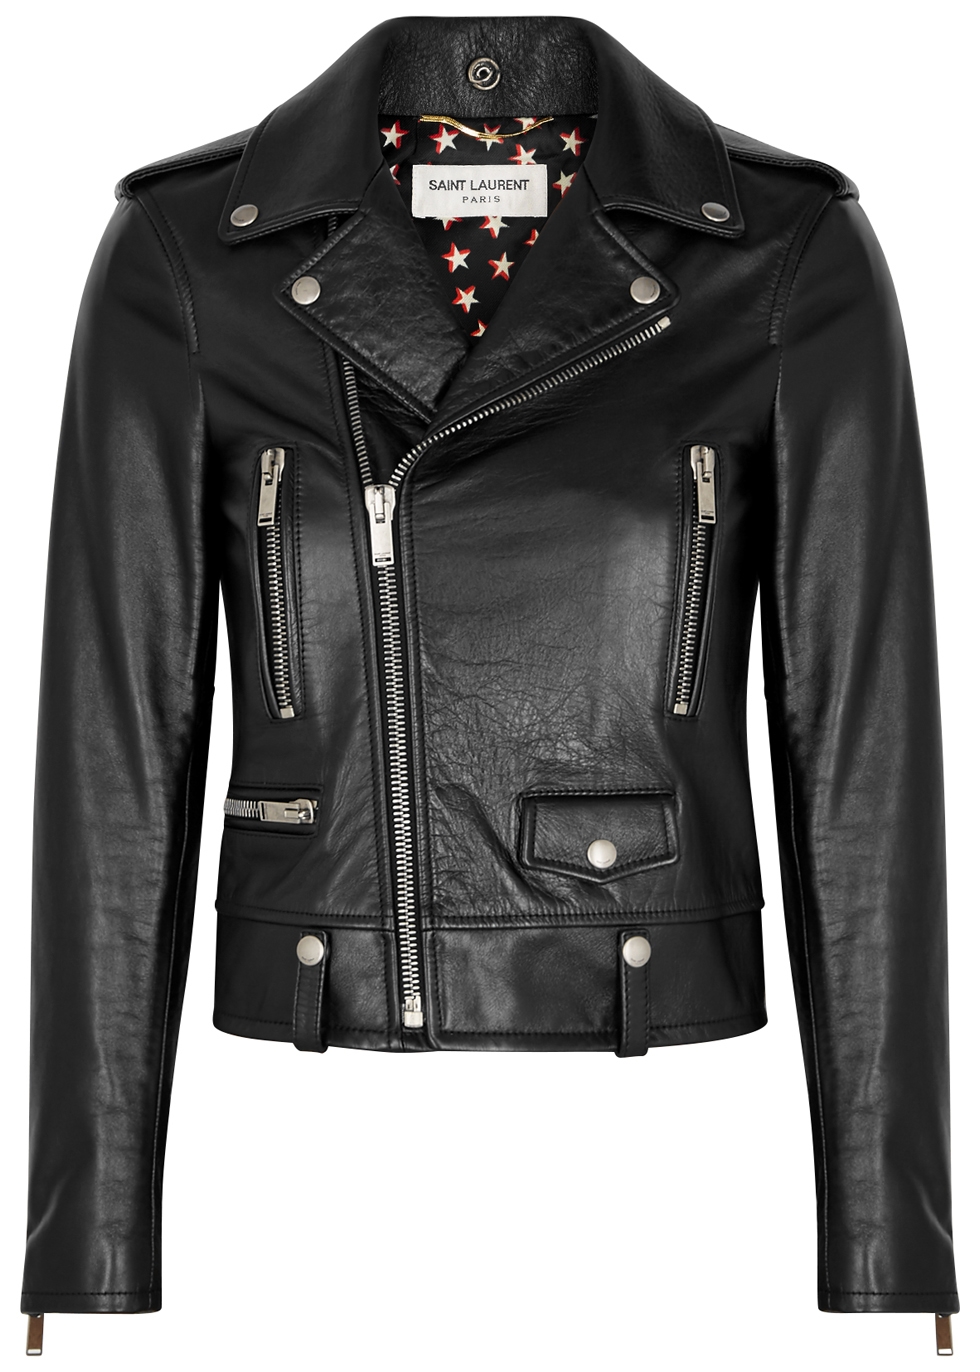 Saint Laurent Black leather jacket - Harvey Nichols